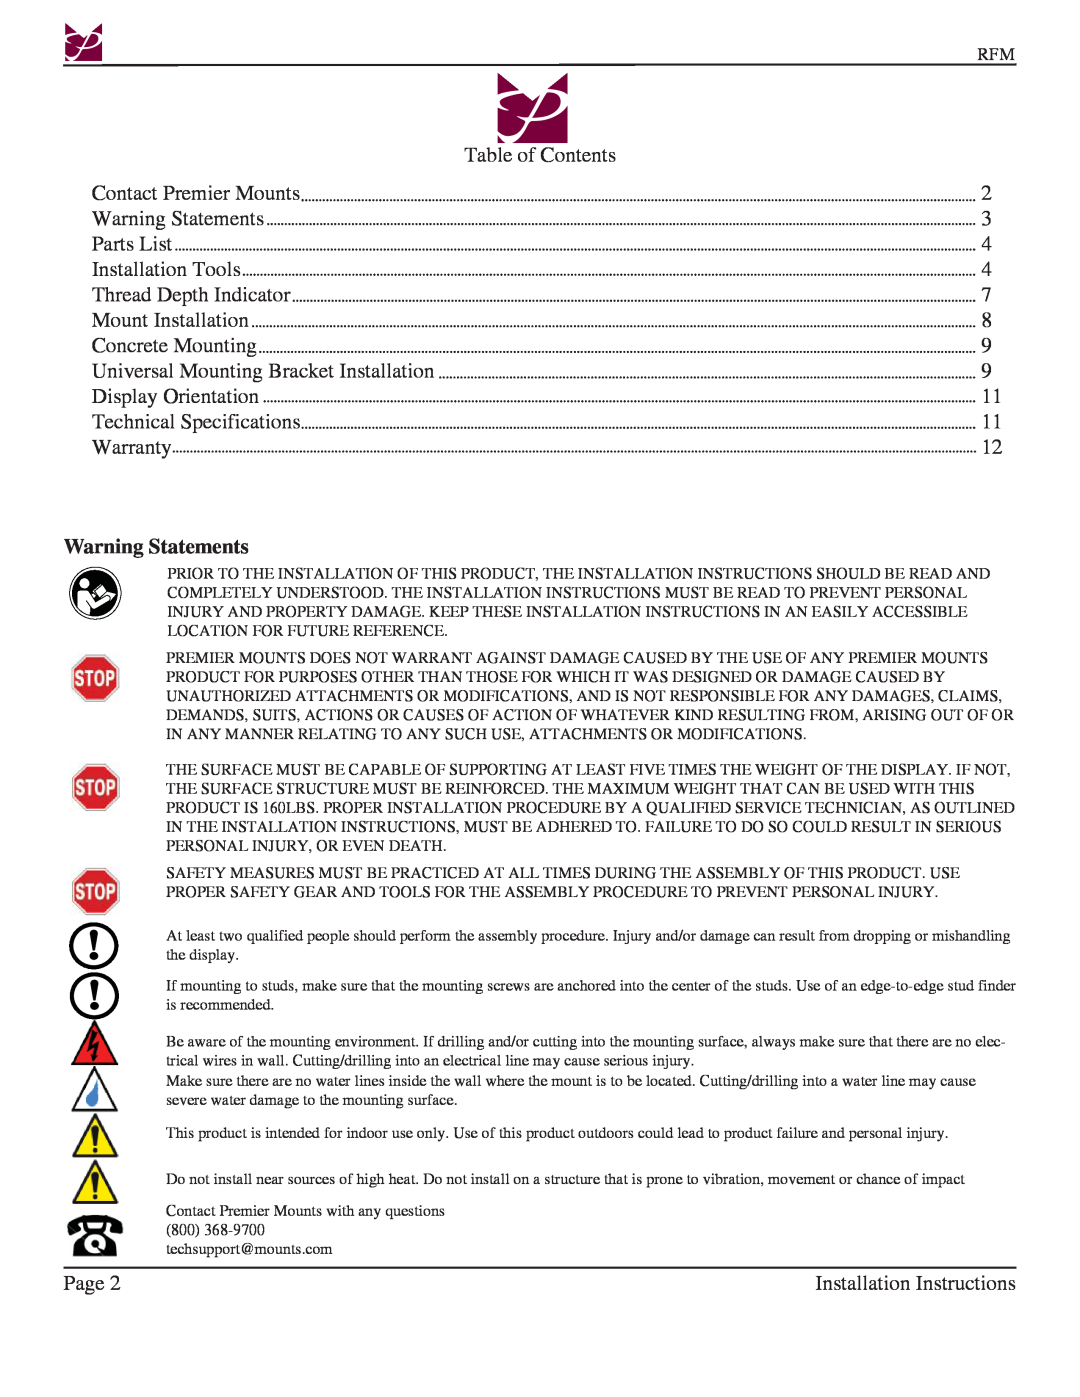 Premier Mounts RFM, Rotary series installation instructions Warning Statements 